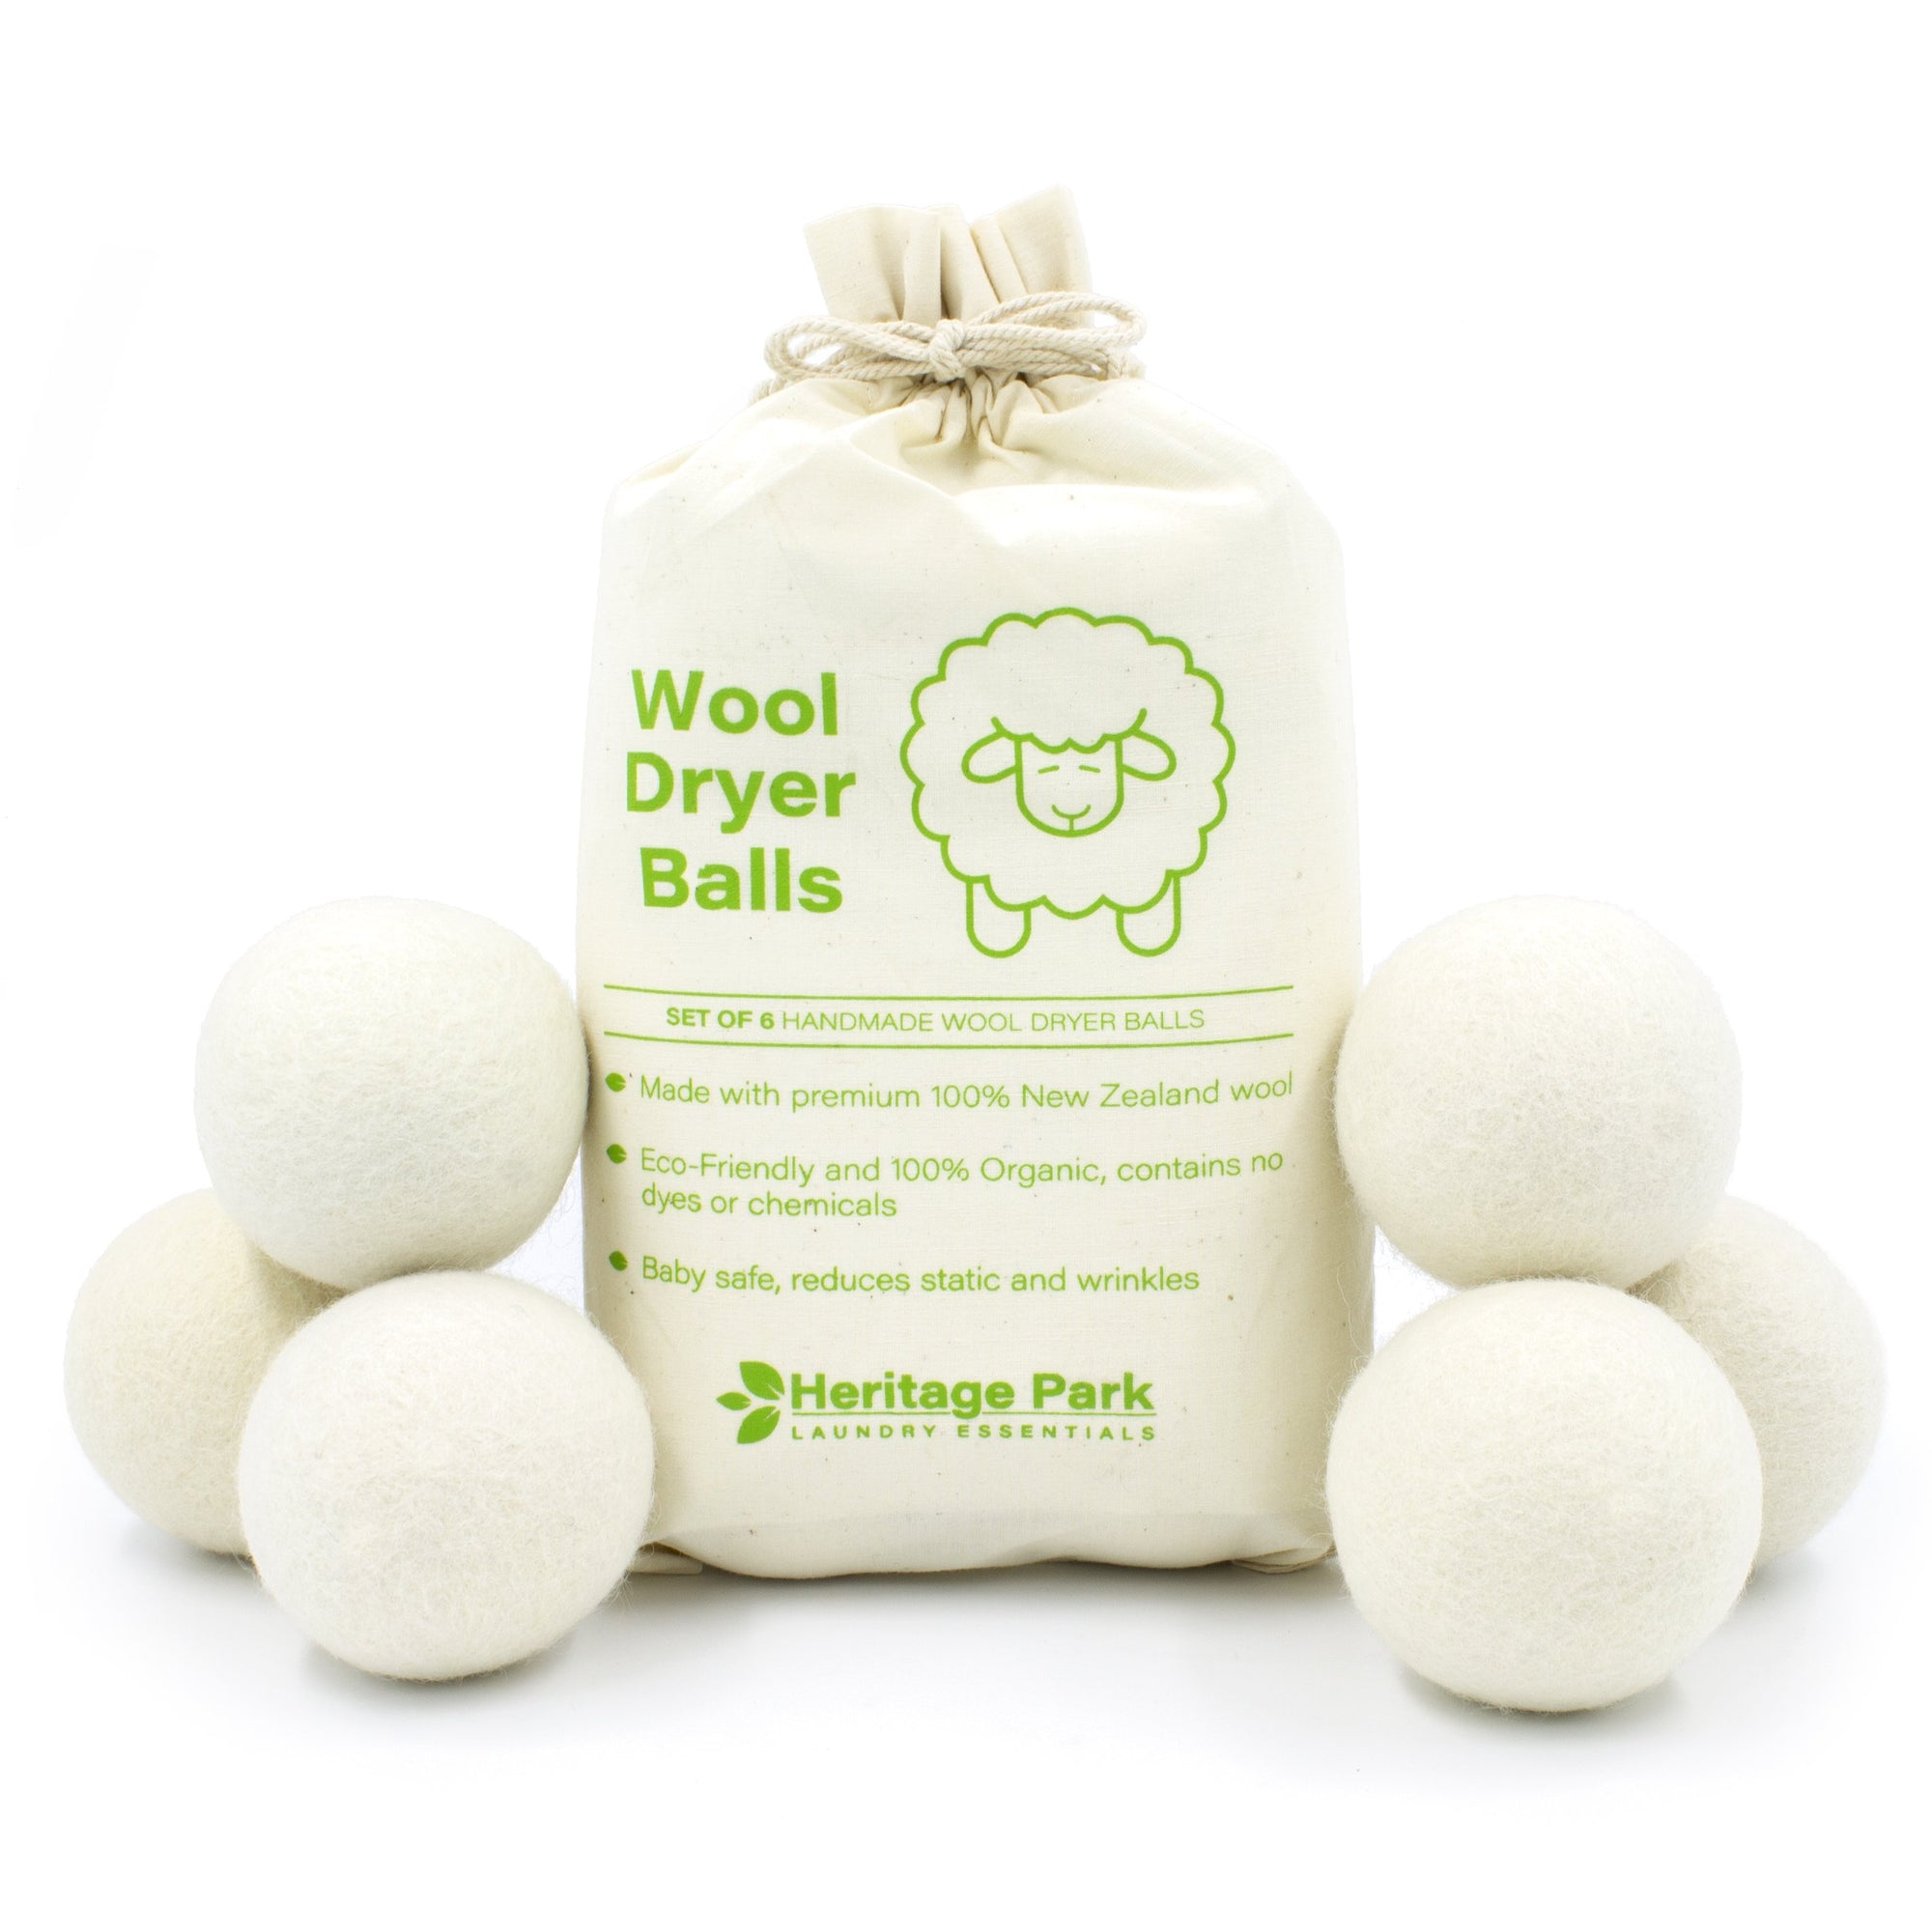  Mulberry Park Silks Heritage Park Wool Dryer Balls - White / 6-Pack